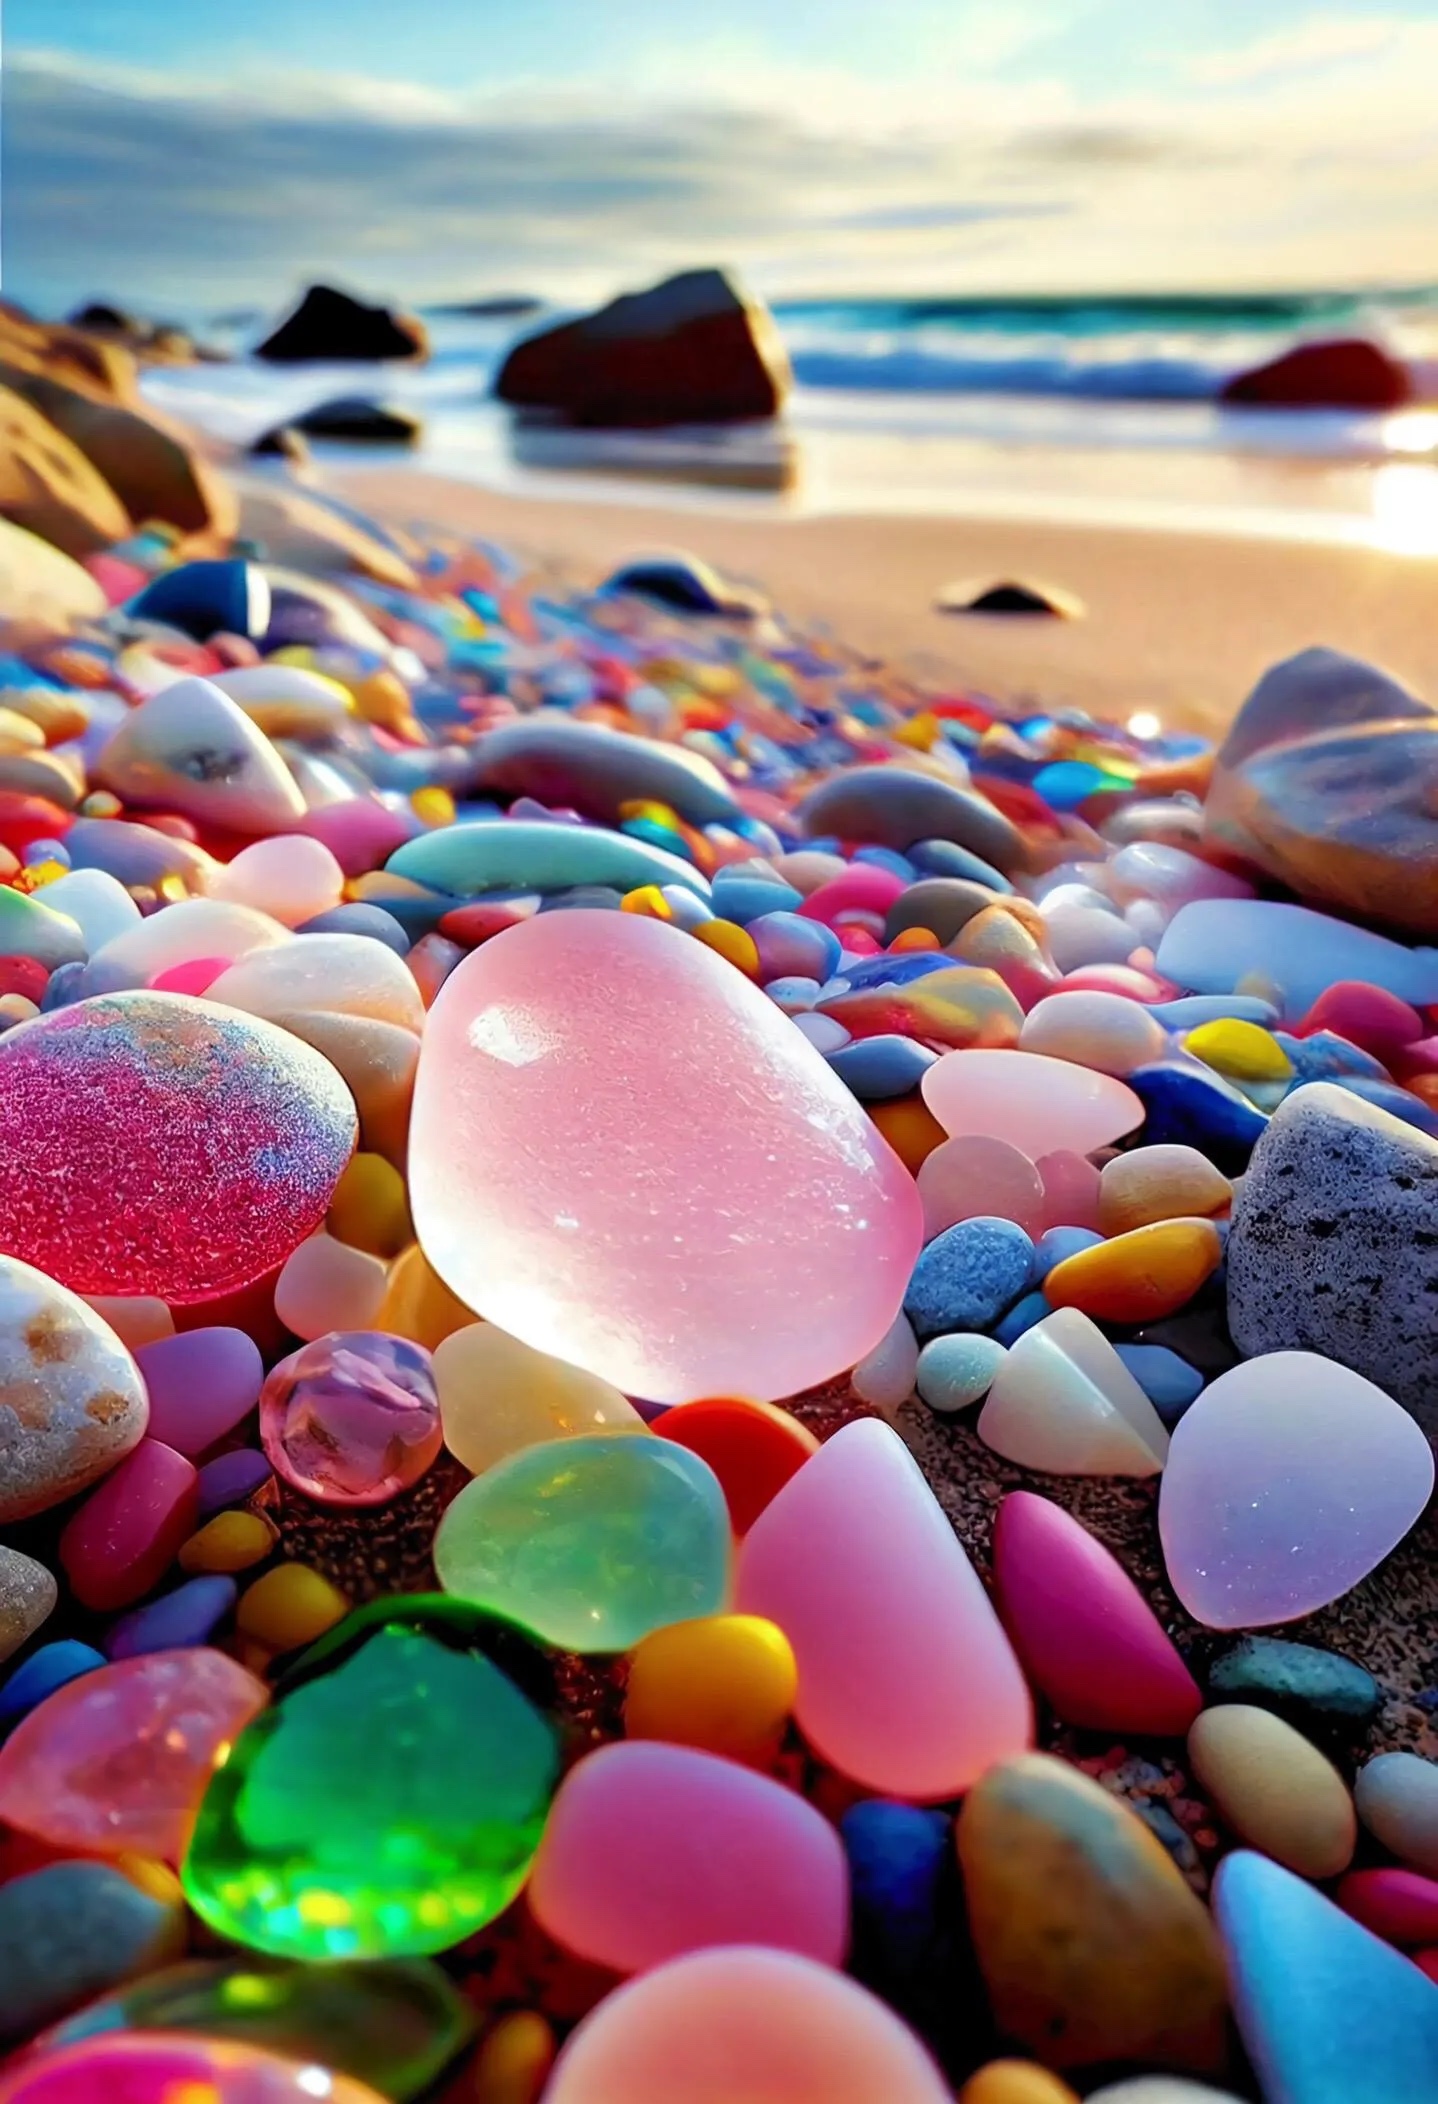 Nature Stone Island Colourful Stone Cellphone Beach Sunlight Water